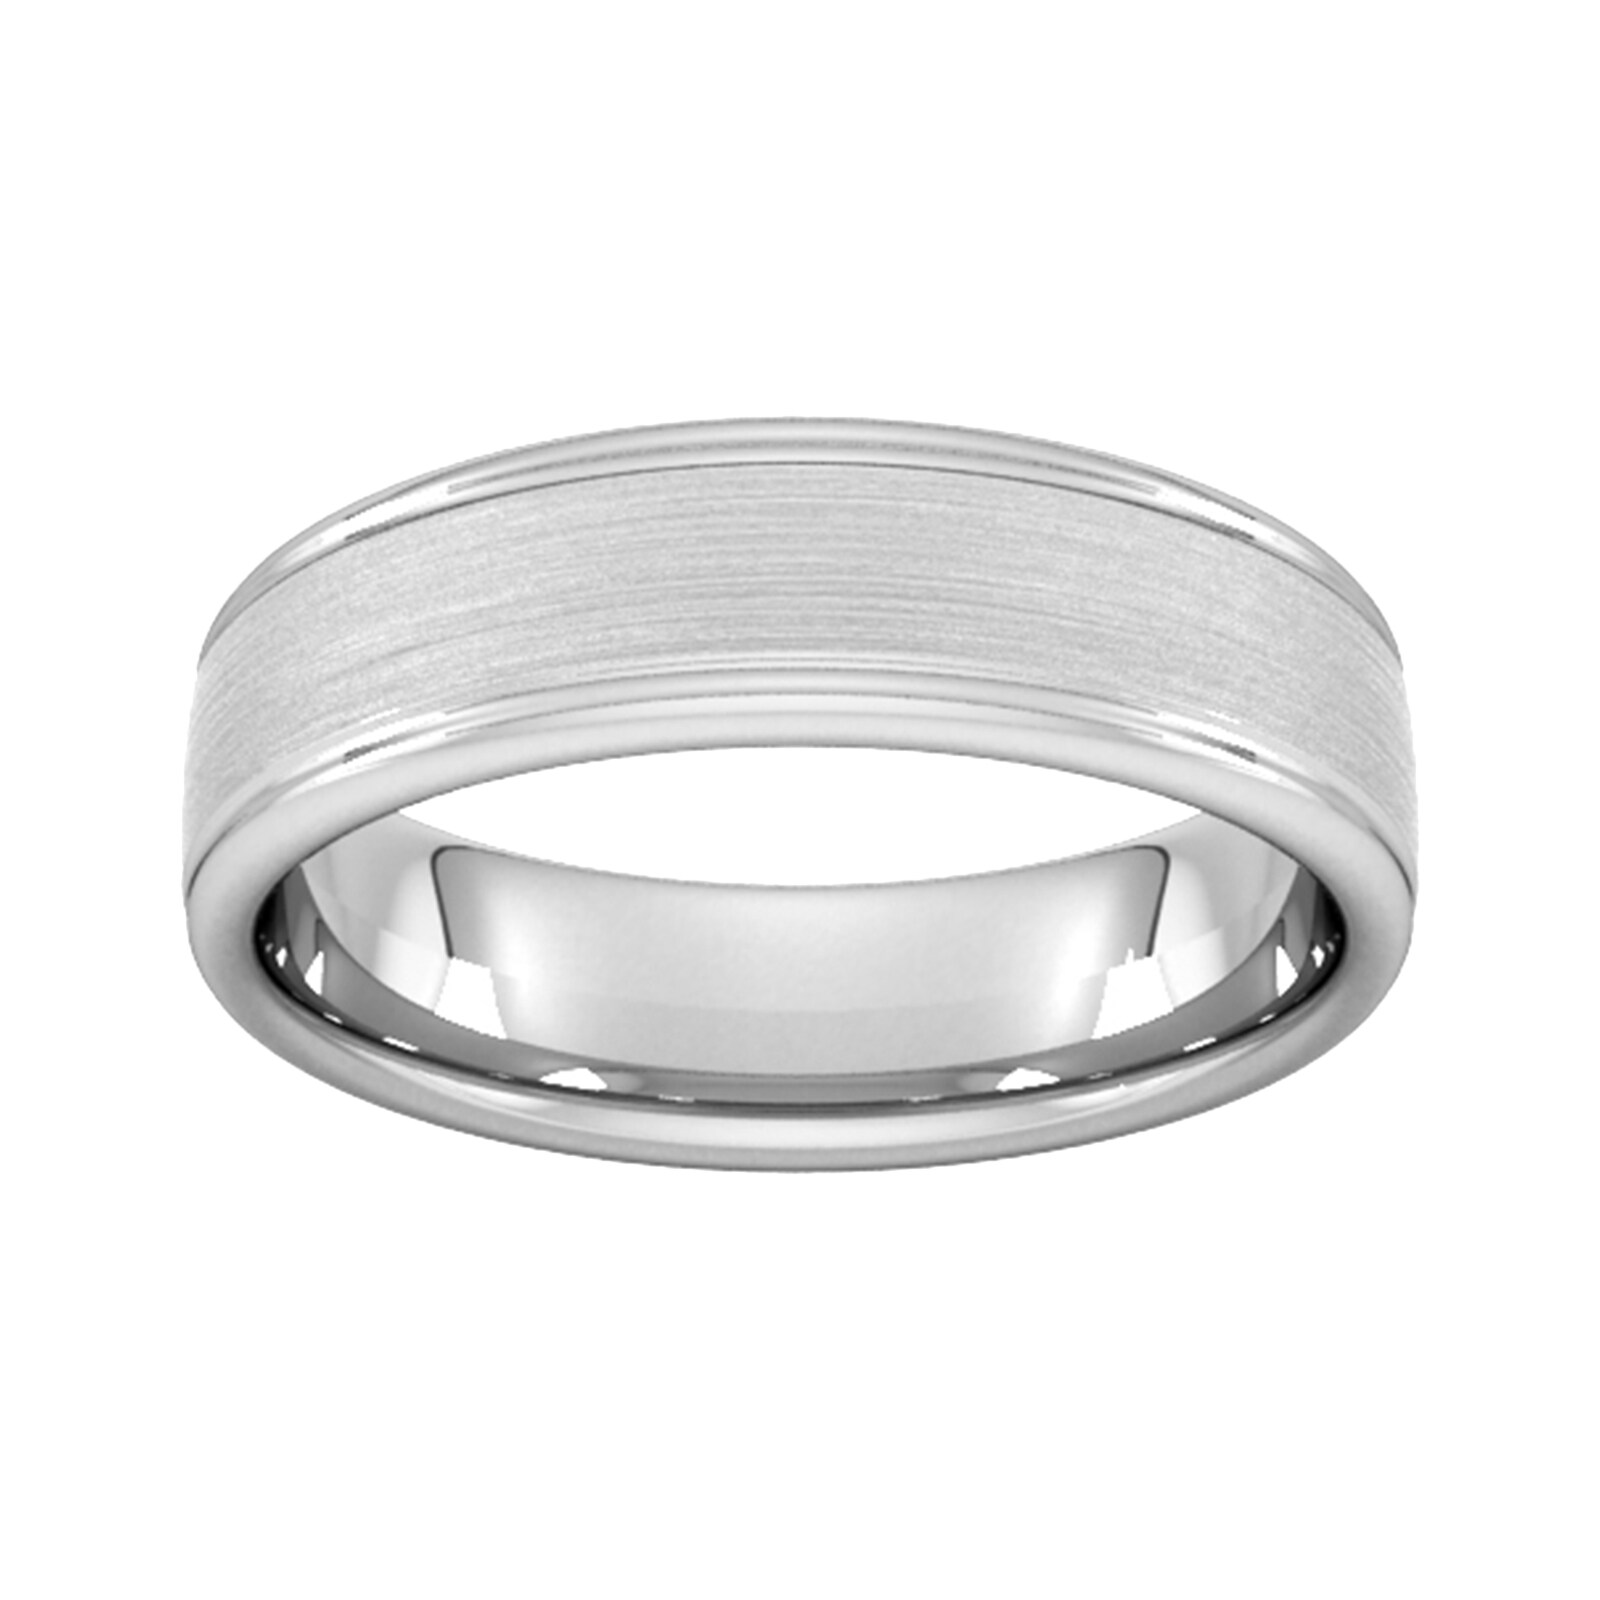 6mm Slight Court Standard Matt Centre With Grooves Wedding Ring In 950 Palladium - Ring Size J